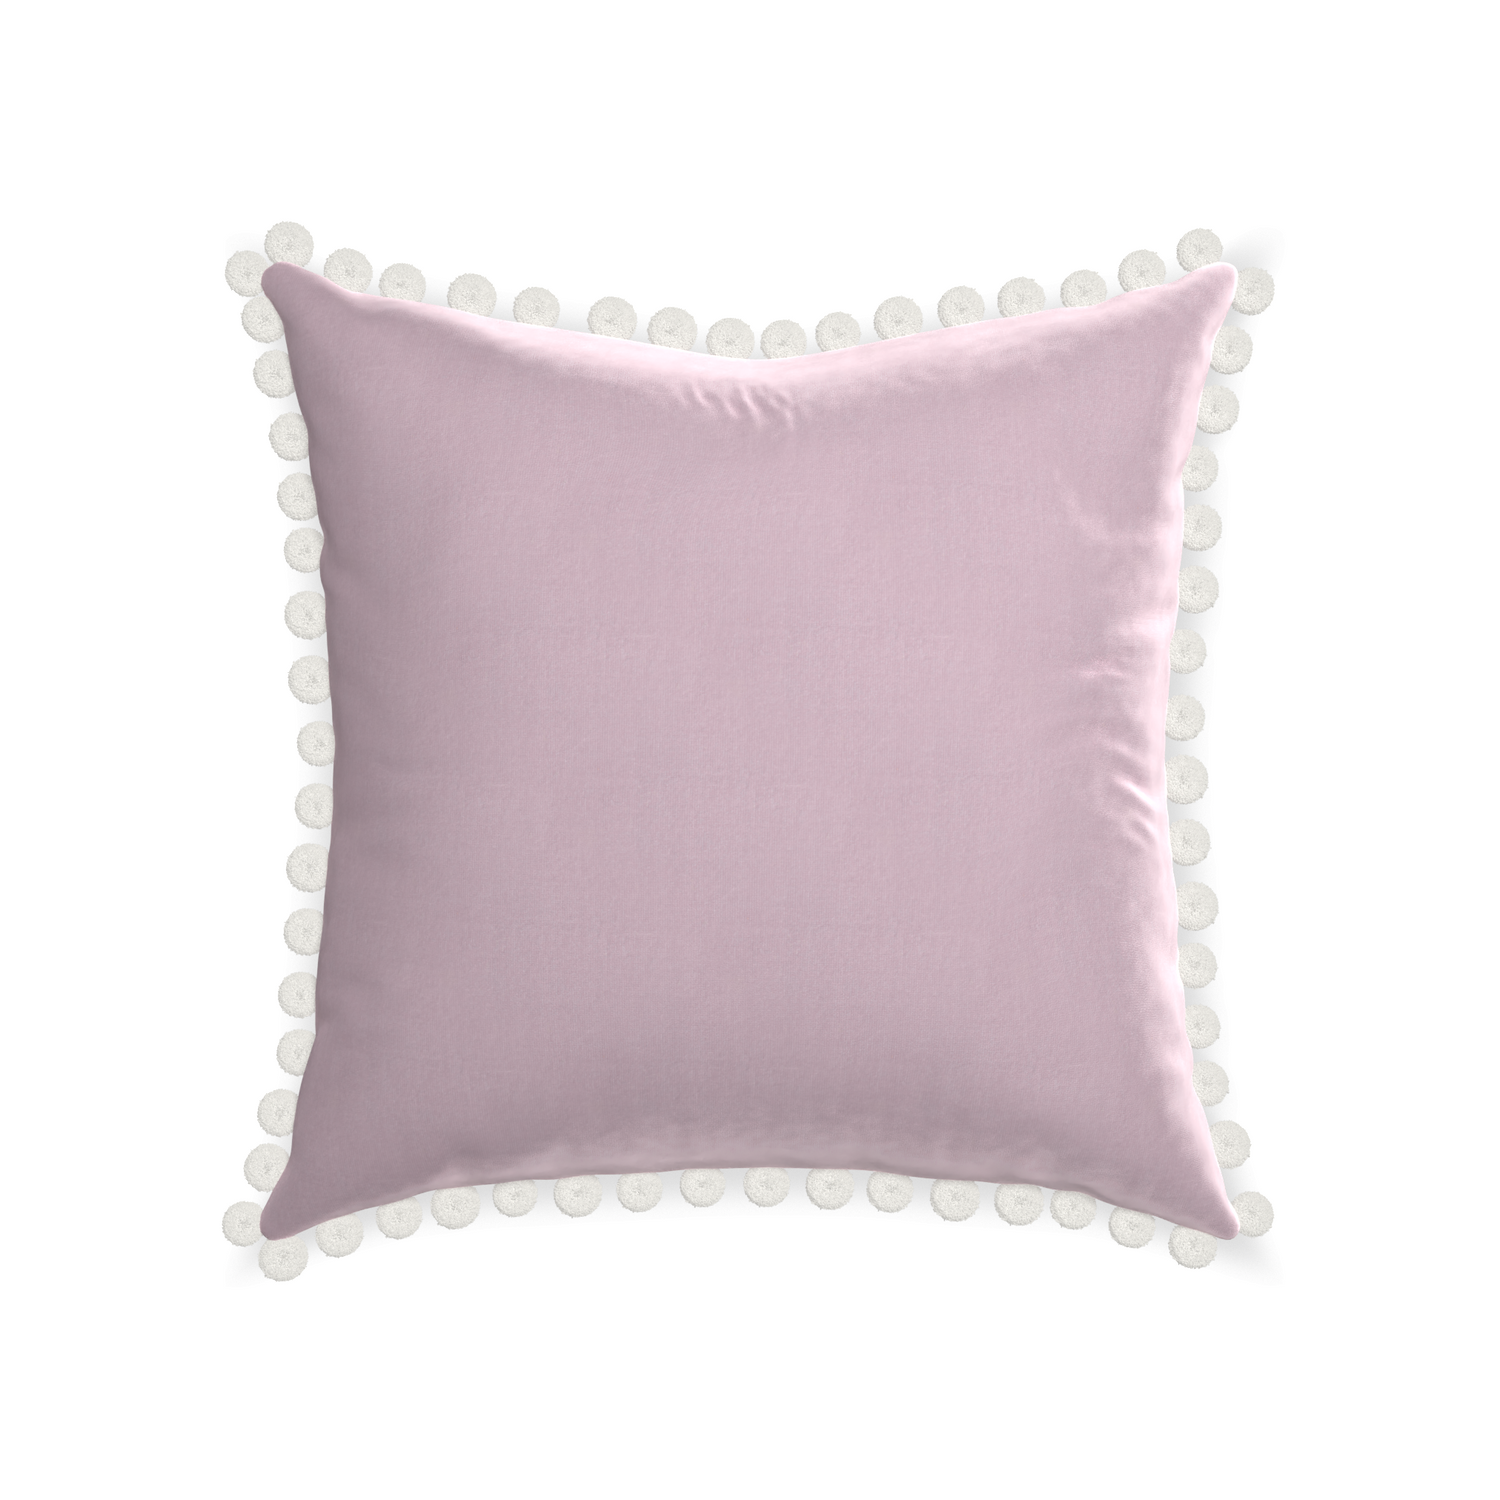 22-square lilac velvet custom pillow with snow pom pom on white background